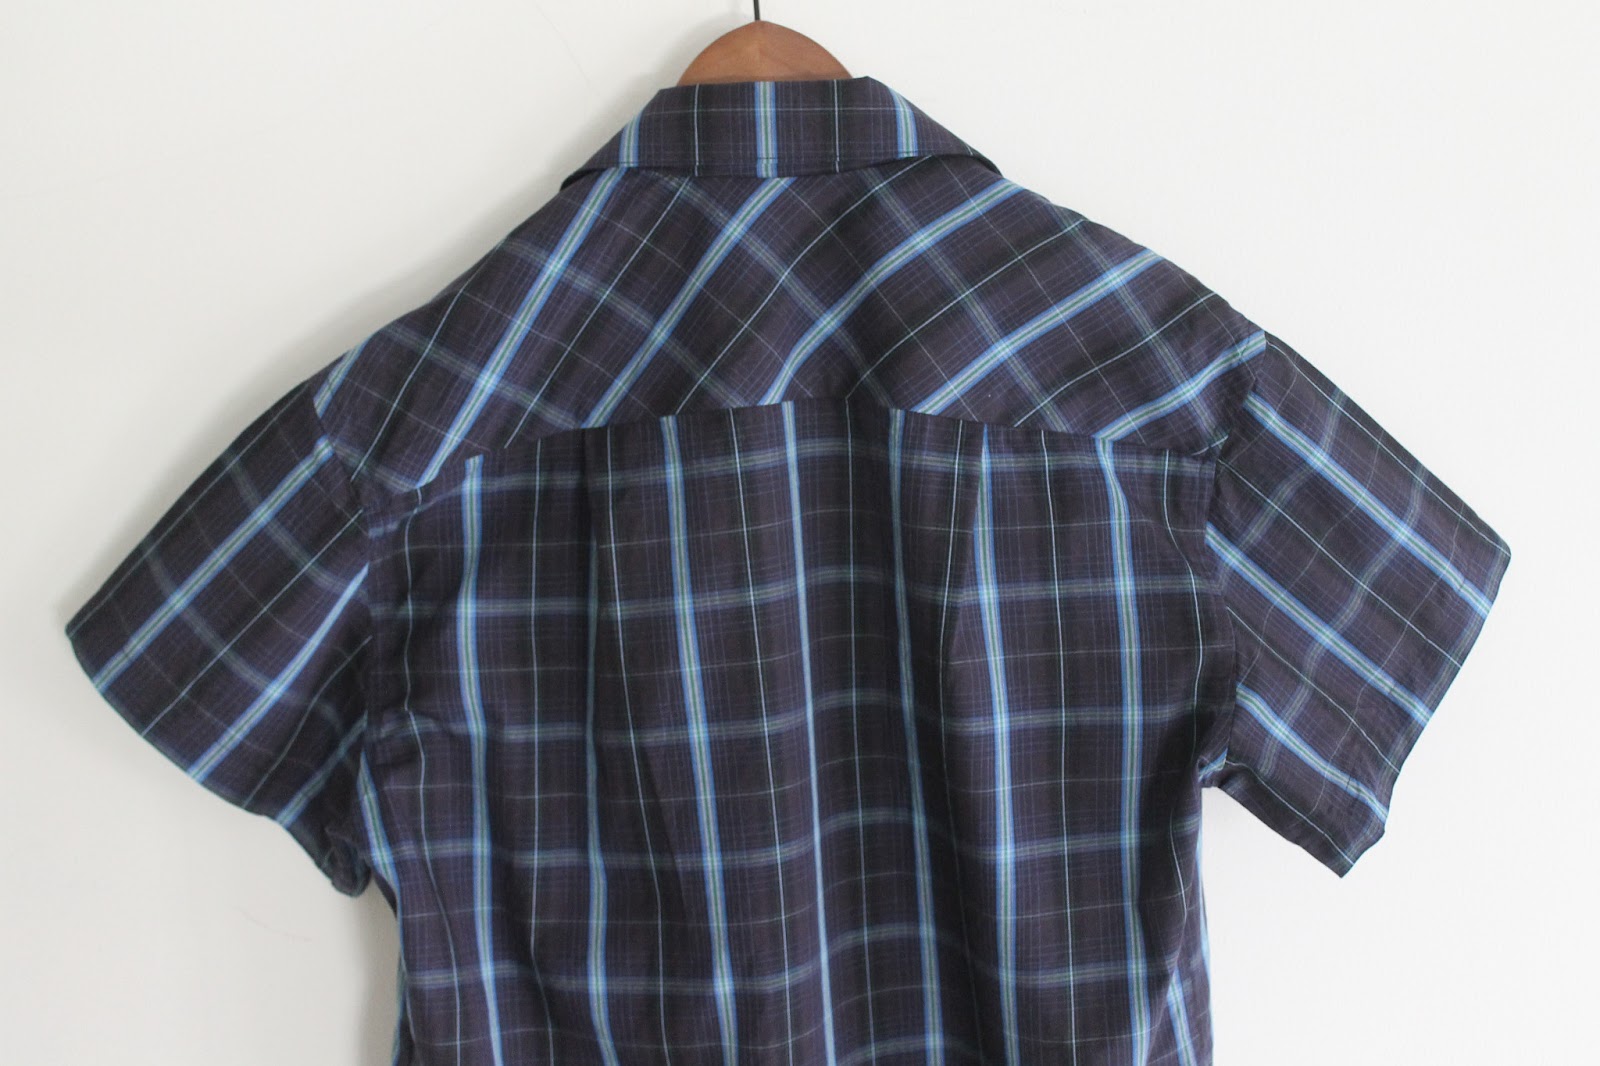 What's so good about a split-yoke back panelling a shirt? : r ...